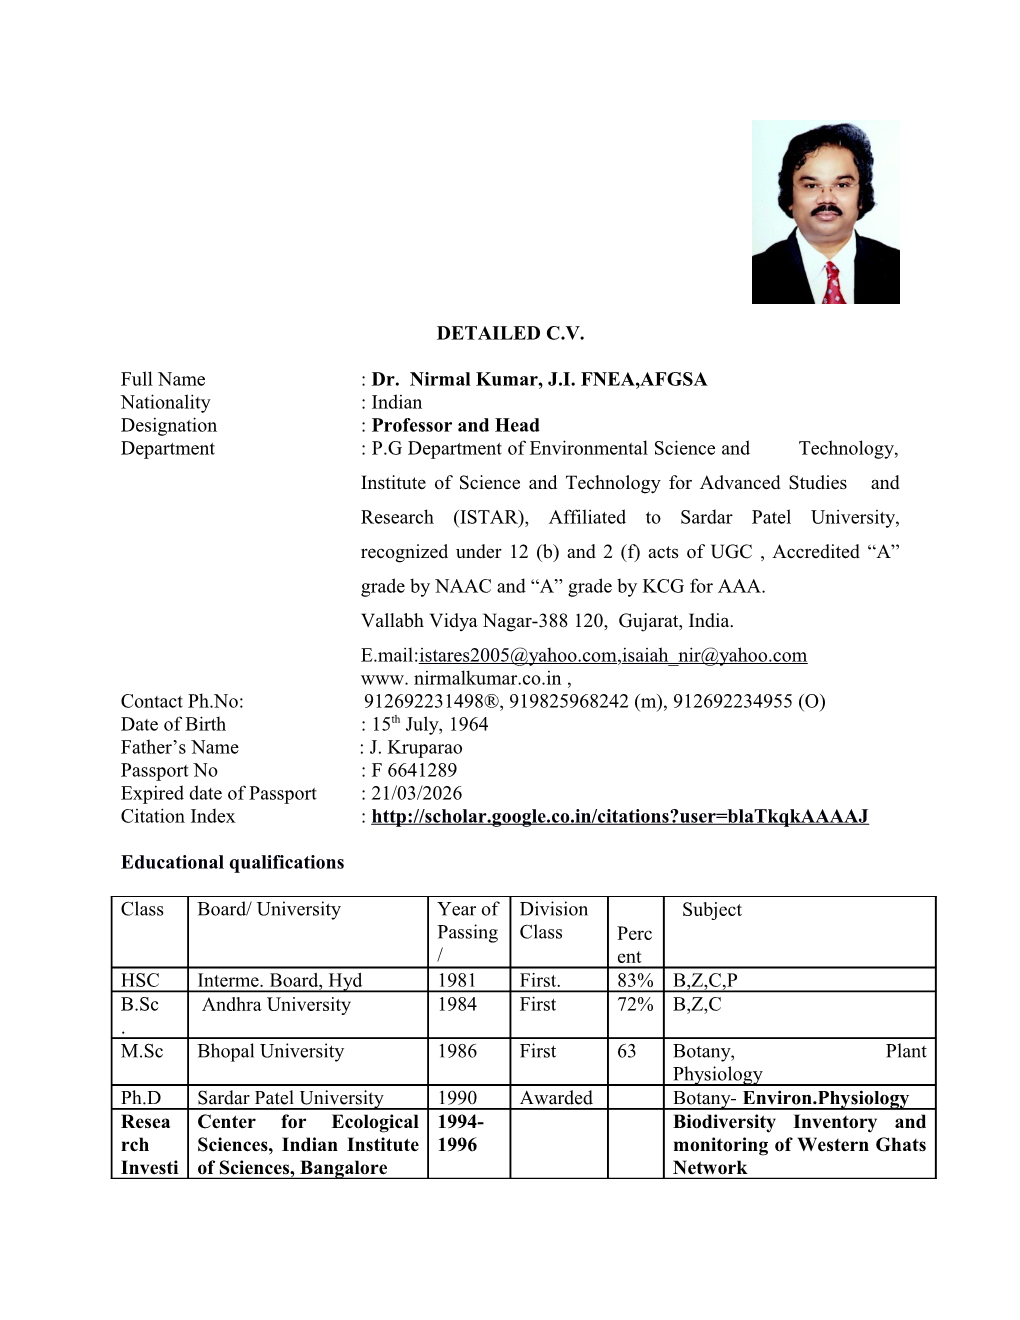 Full Name : Dr. Nirmal Kumar, J.I. FNEA,AFGSA